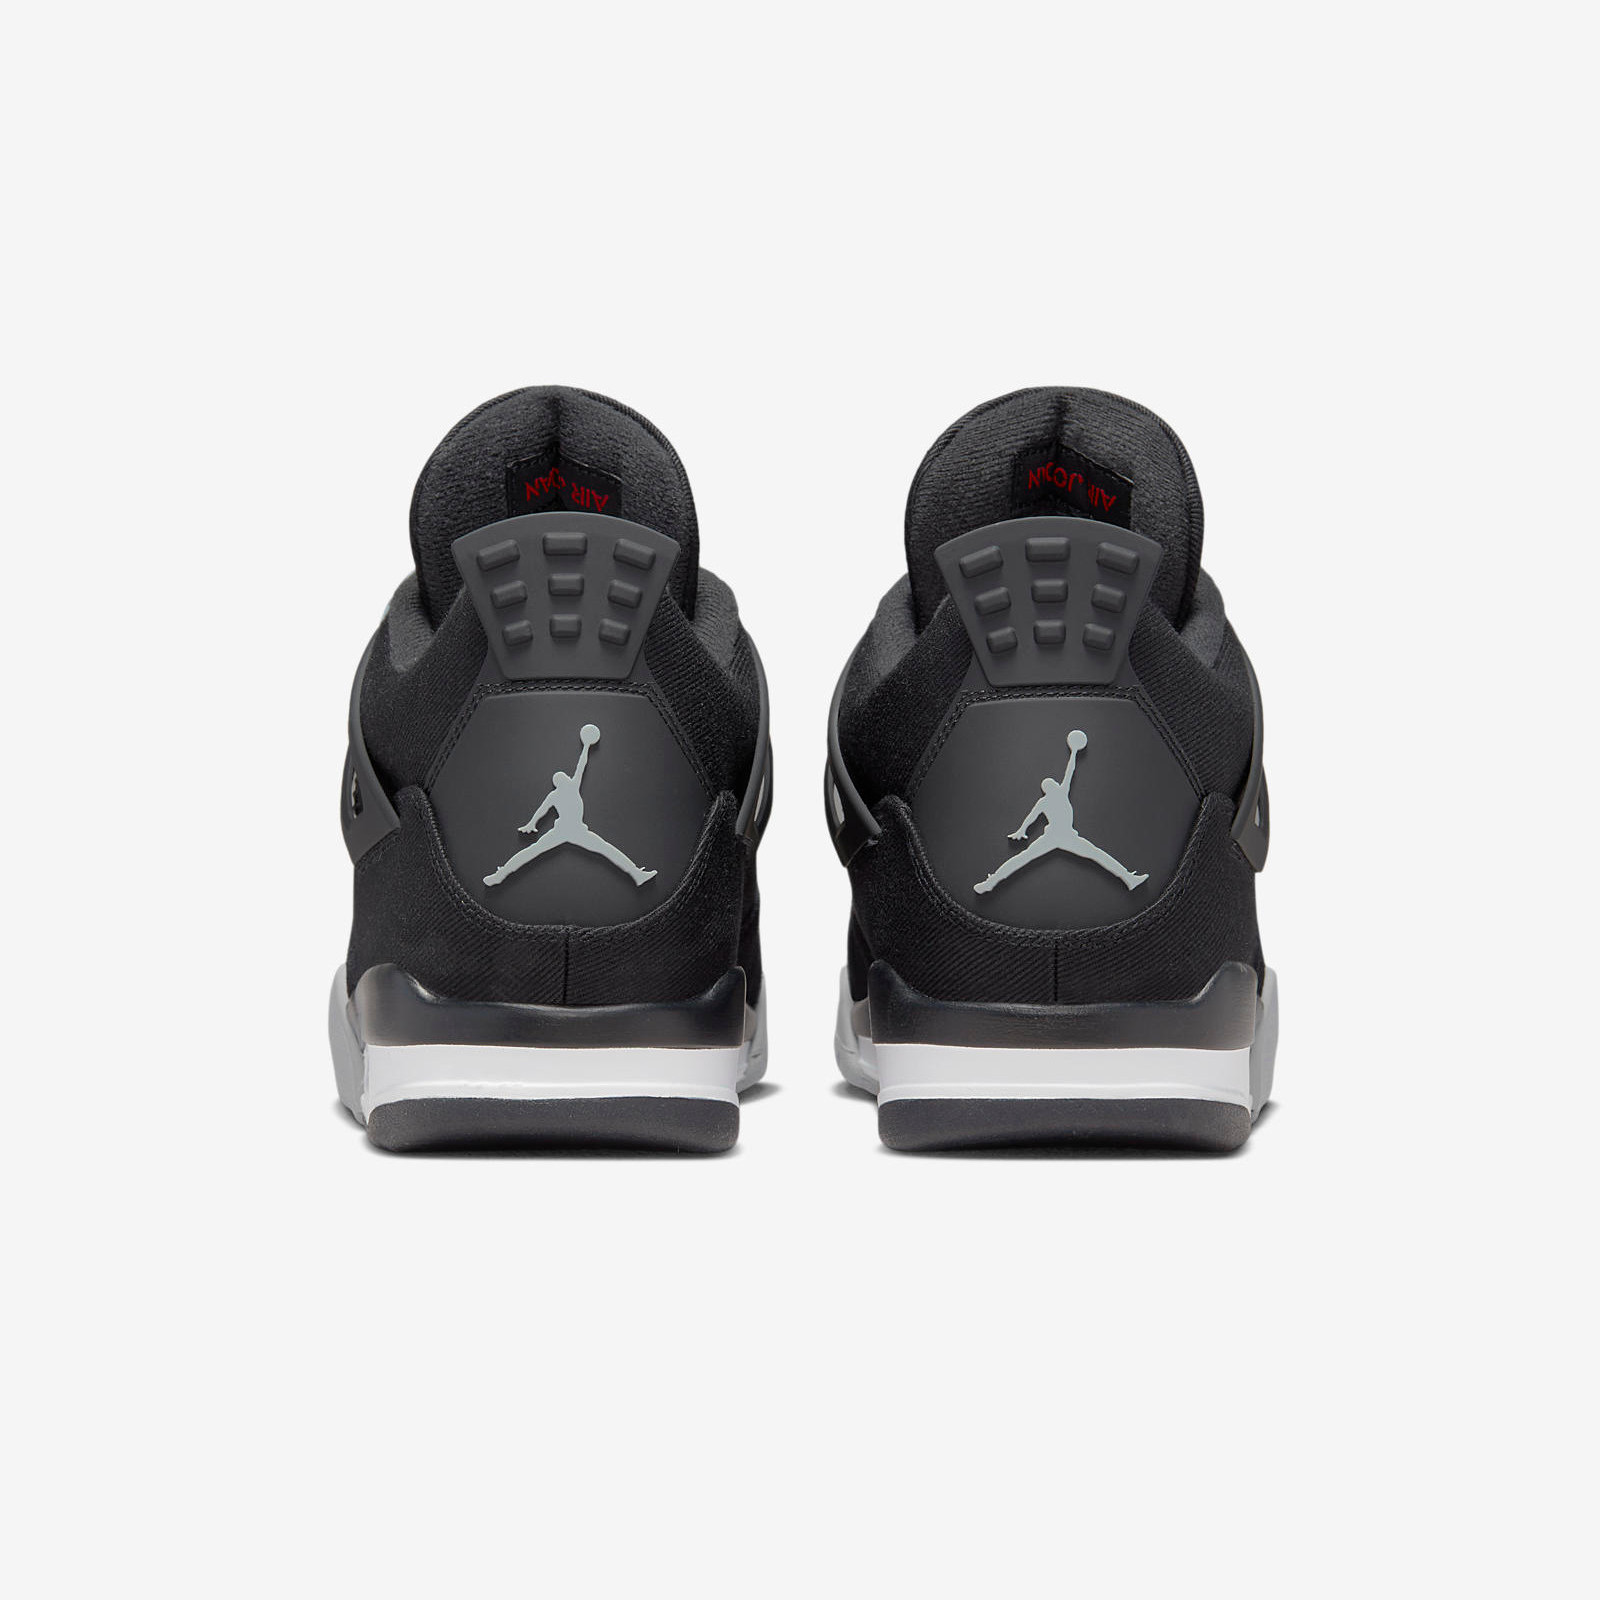 Air Jordan 4 Retro
« Black Canvas »